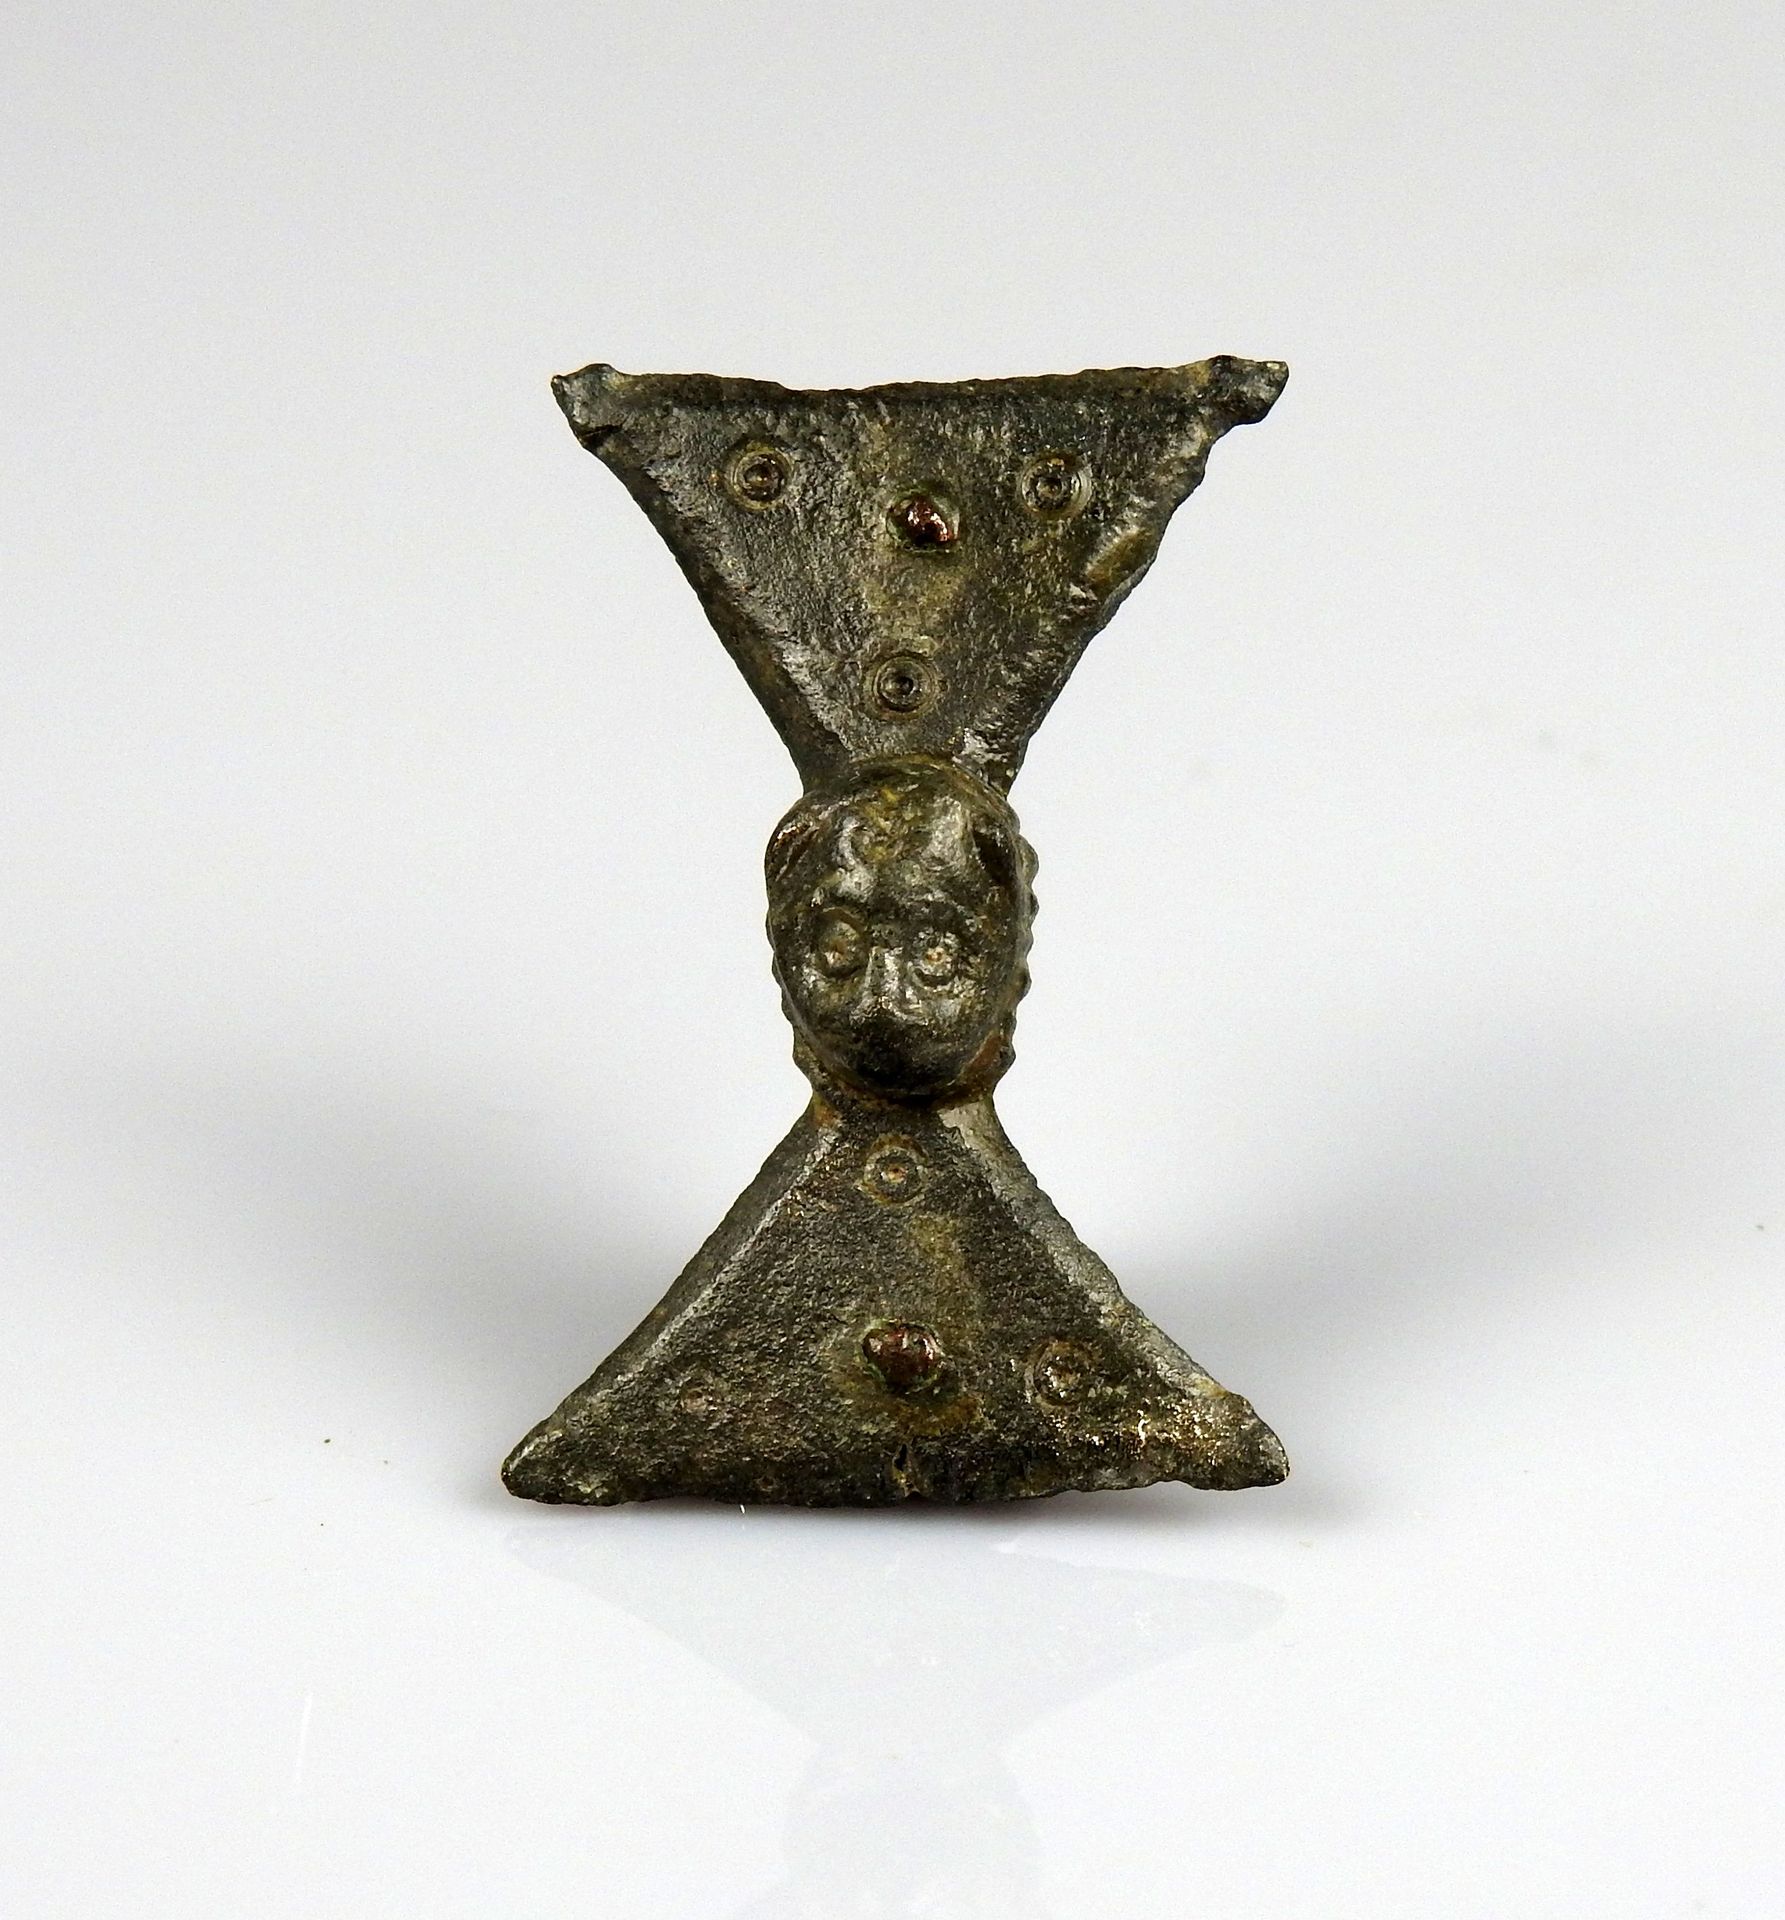 Null Rautenförmige Fibel mit Tierkopf, Bär

Bronze 3,7 cm

Römerzeit, Osteuropa